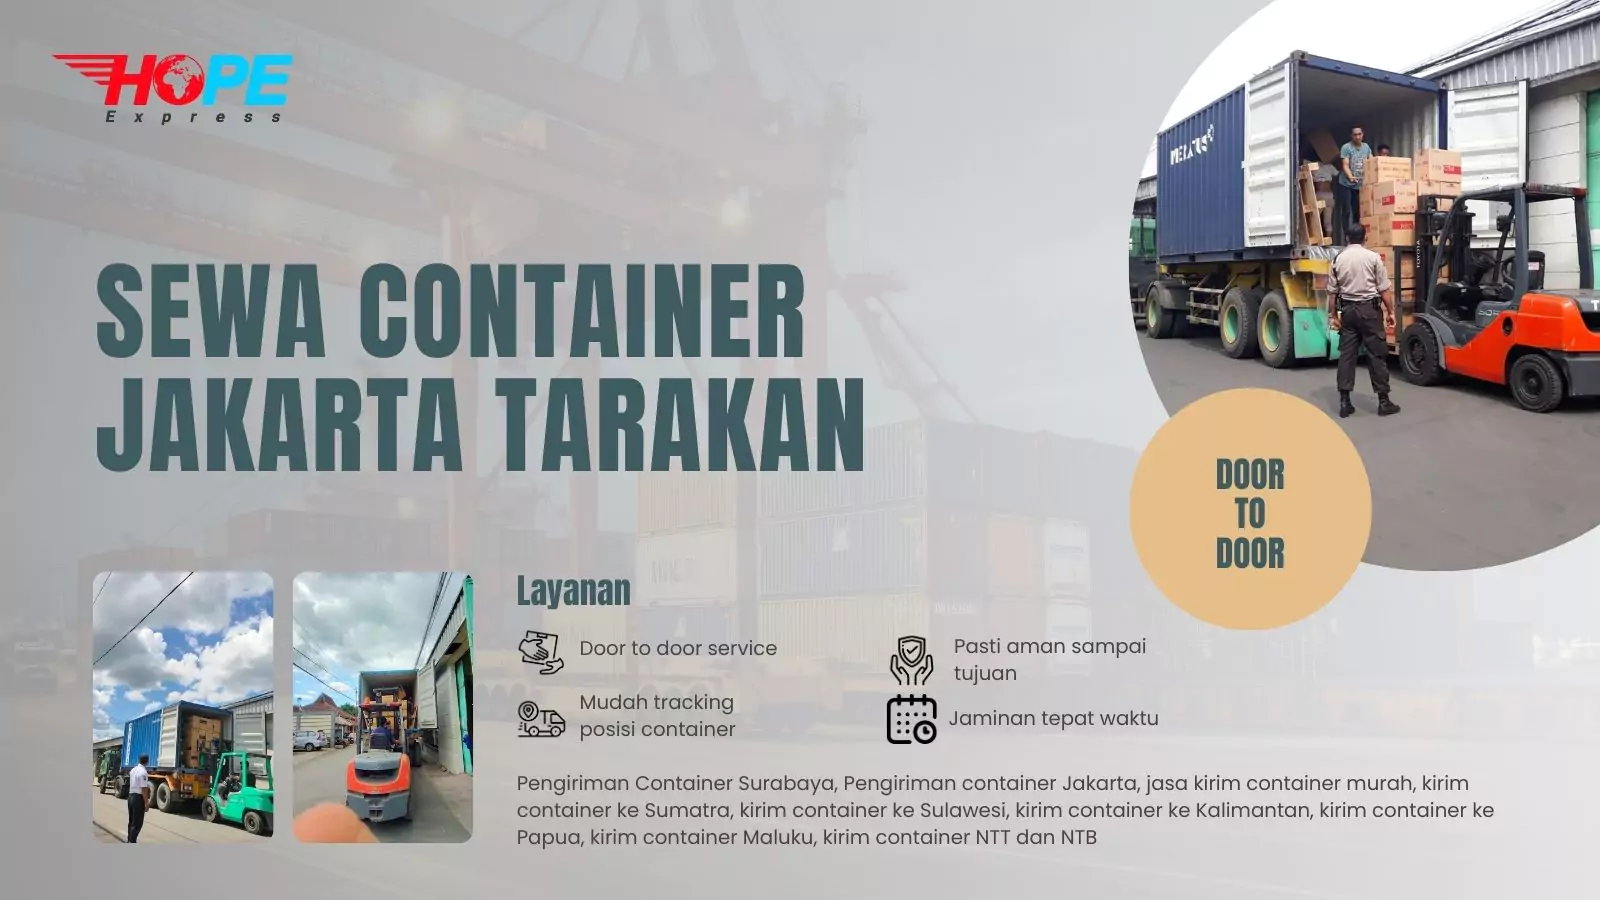 Sewa Container Jakarta Tarakan